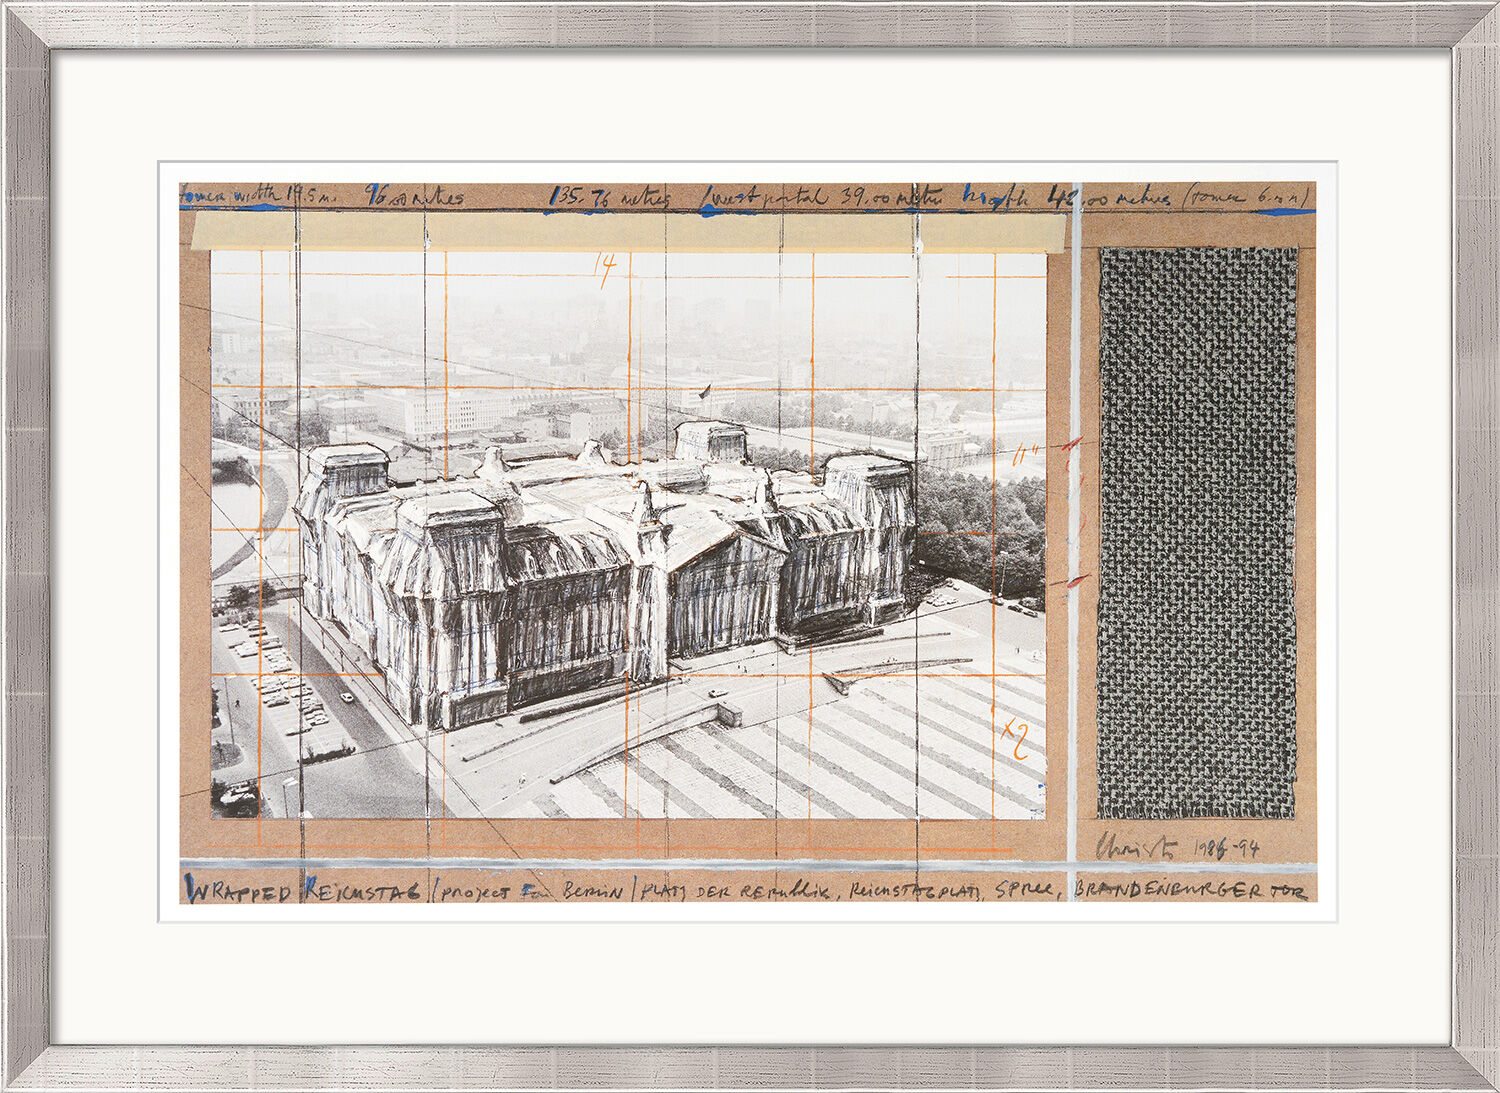 Bild "Wrapped Reichstag, Project for Berlin", inramad von Christo